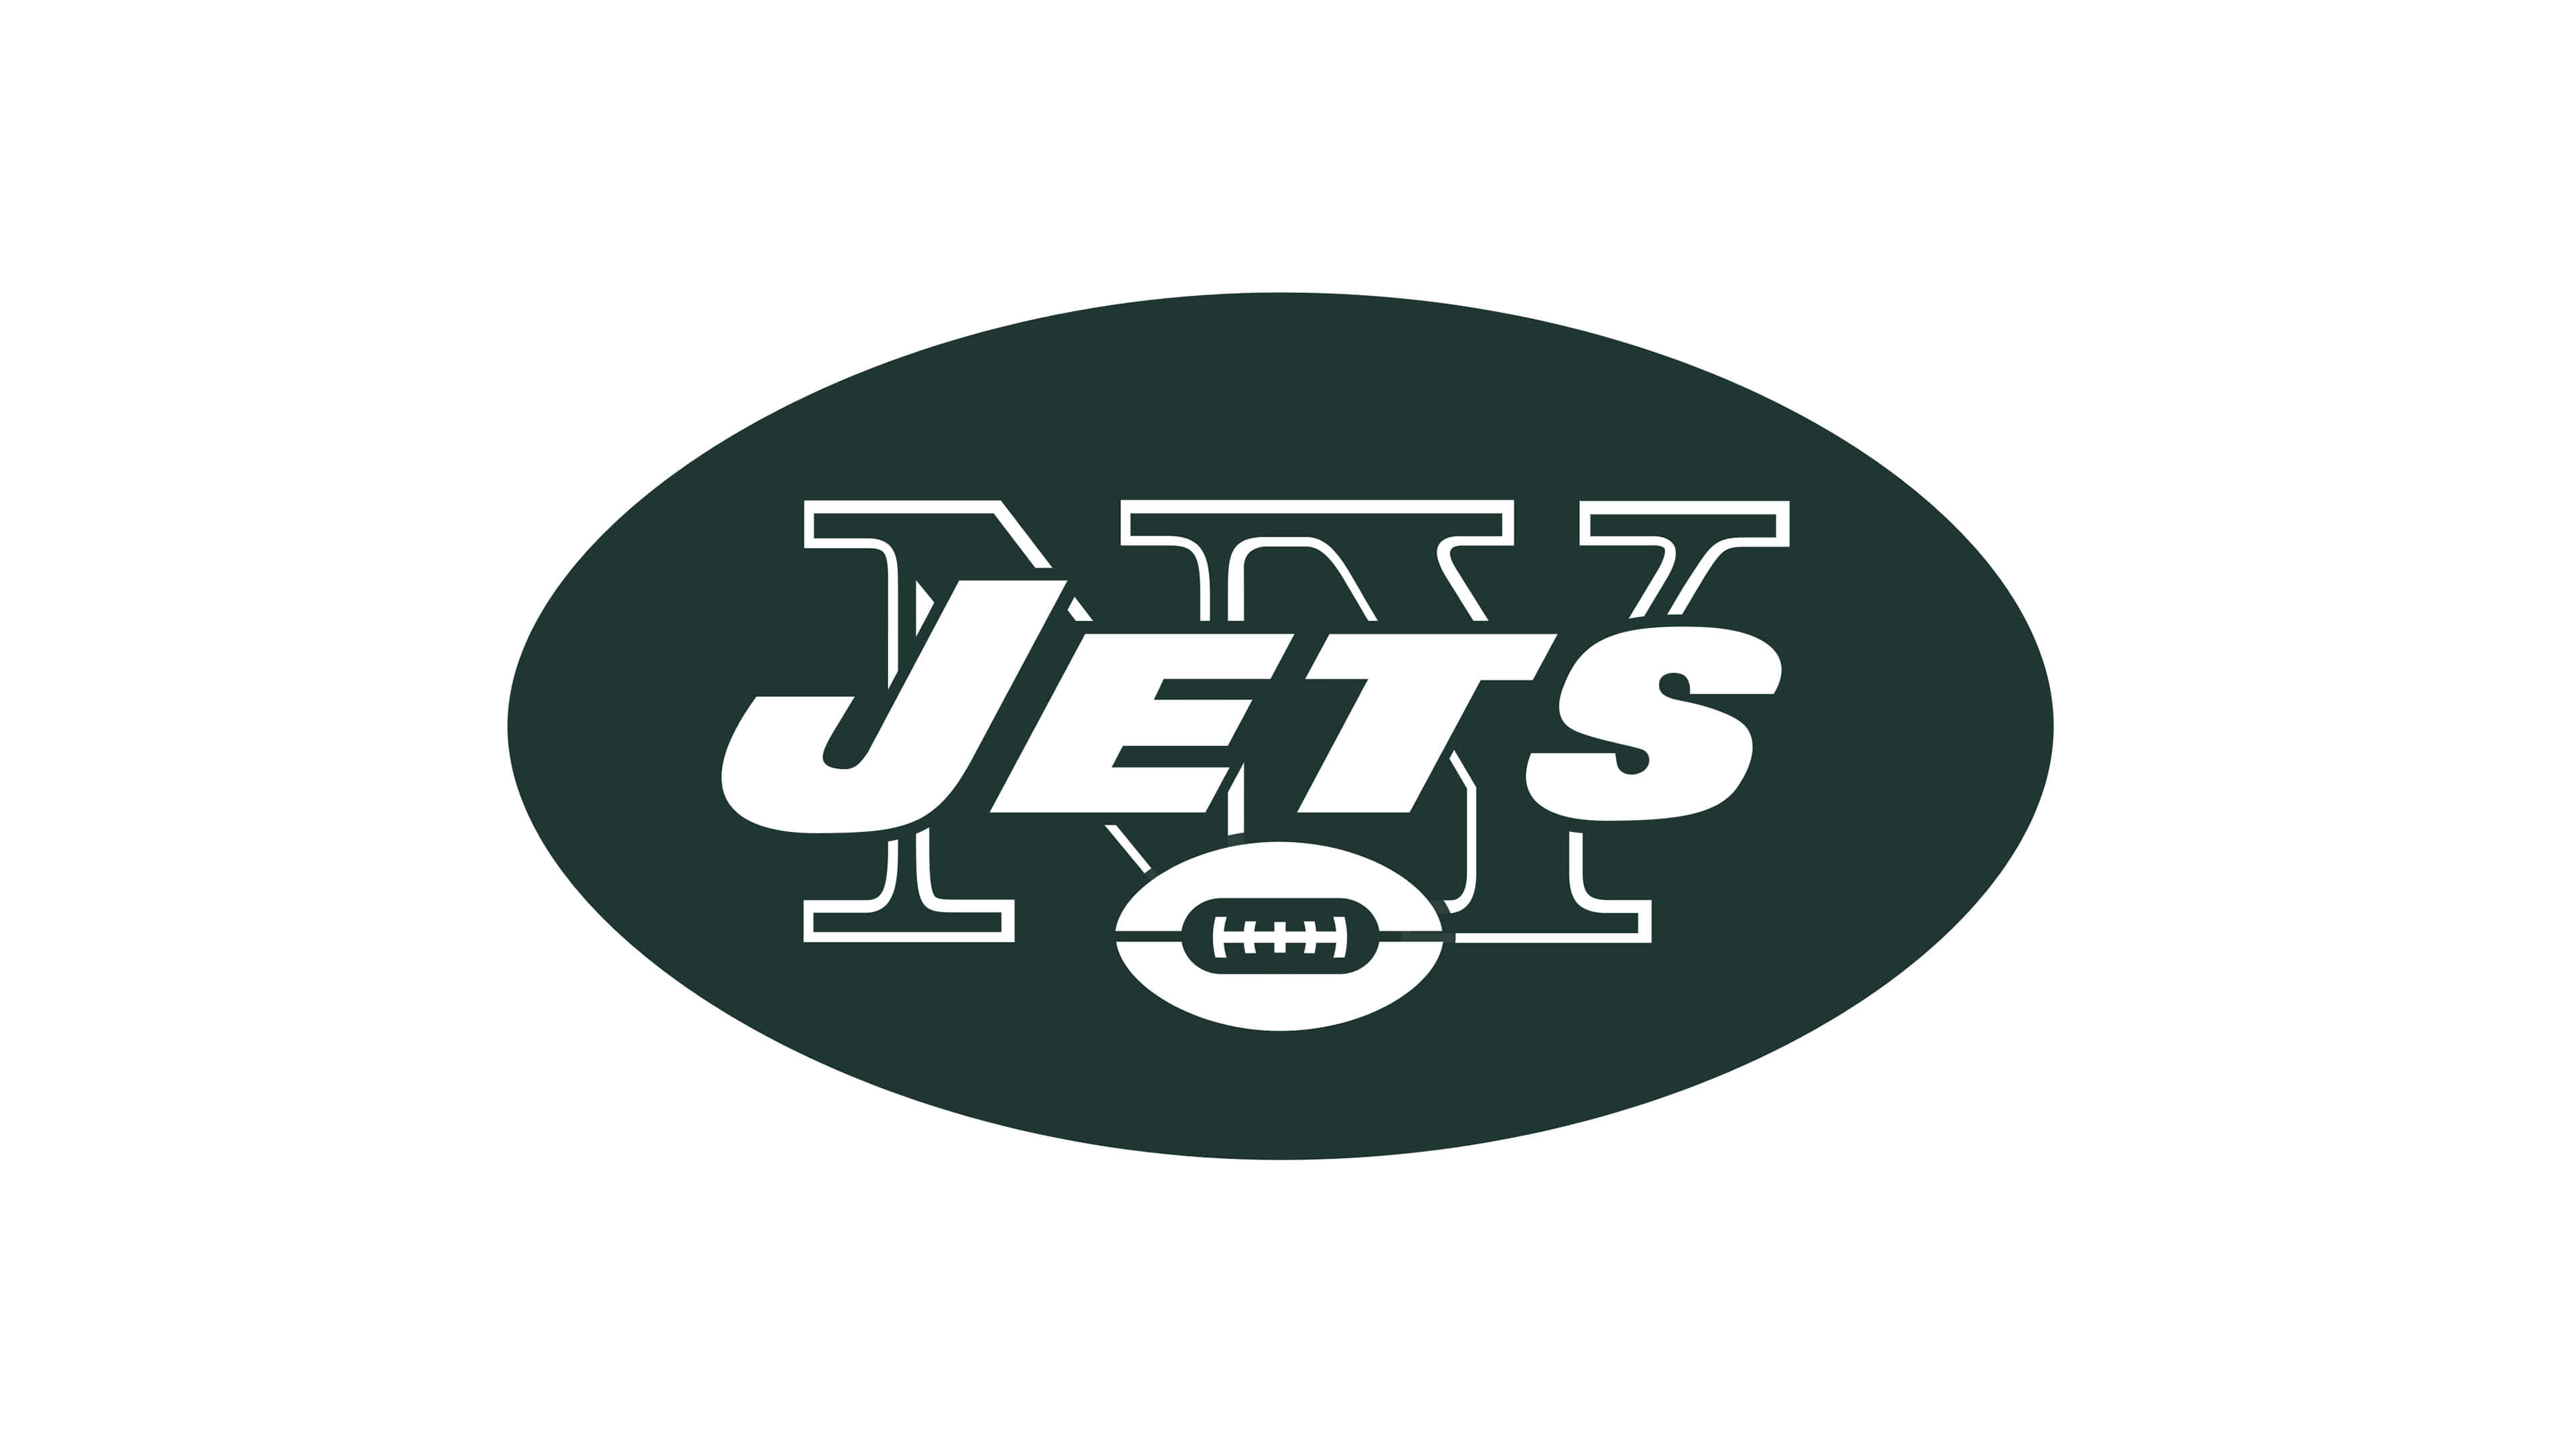 New York Jets, NFL logo, UHD wallpaper, Stunning image, 3840x2160 4K Desktop